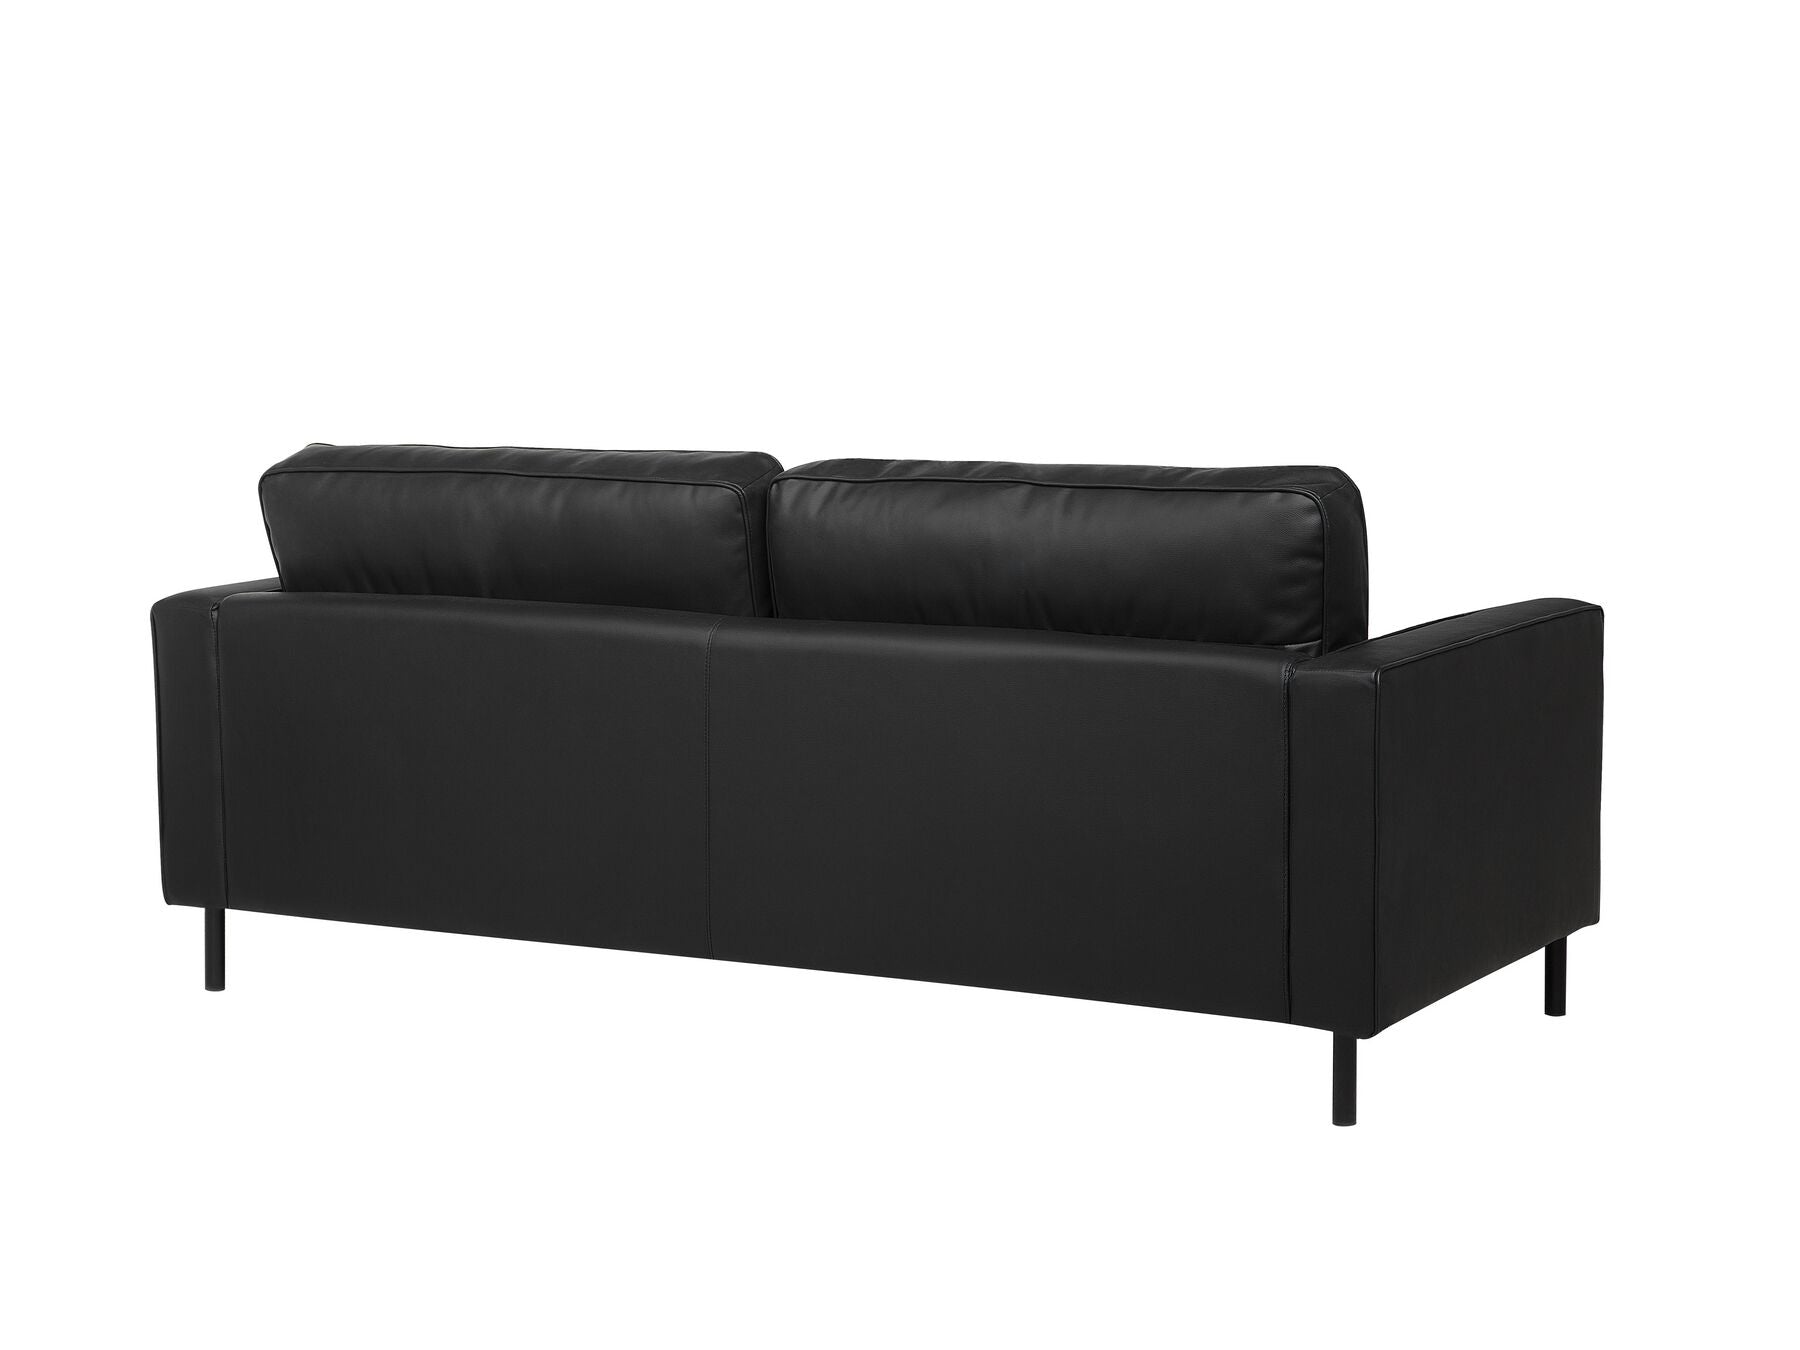 Savalen Leatherette Sofa Black